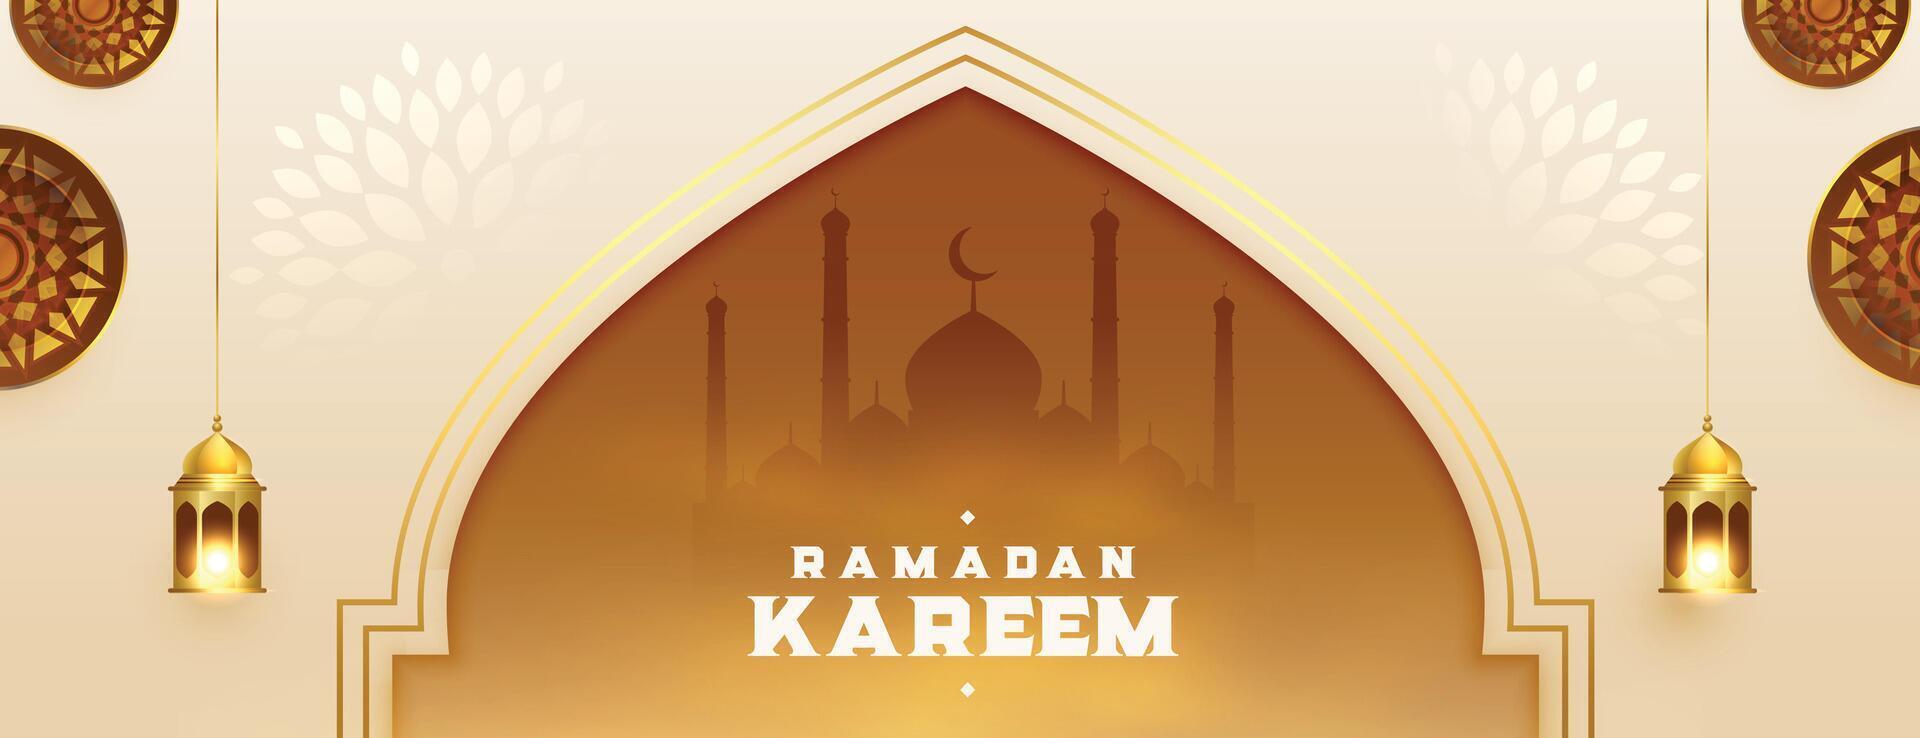 arabic ramadan kareem muslim festival banner design vector